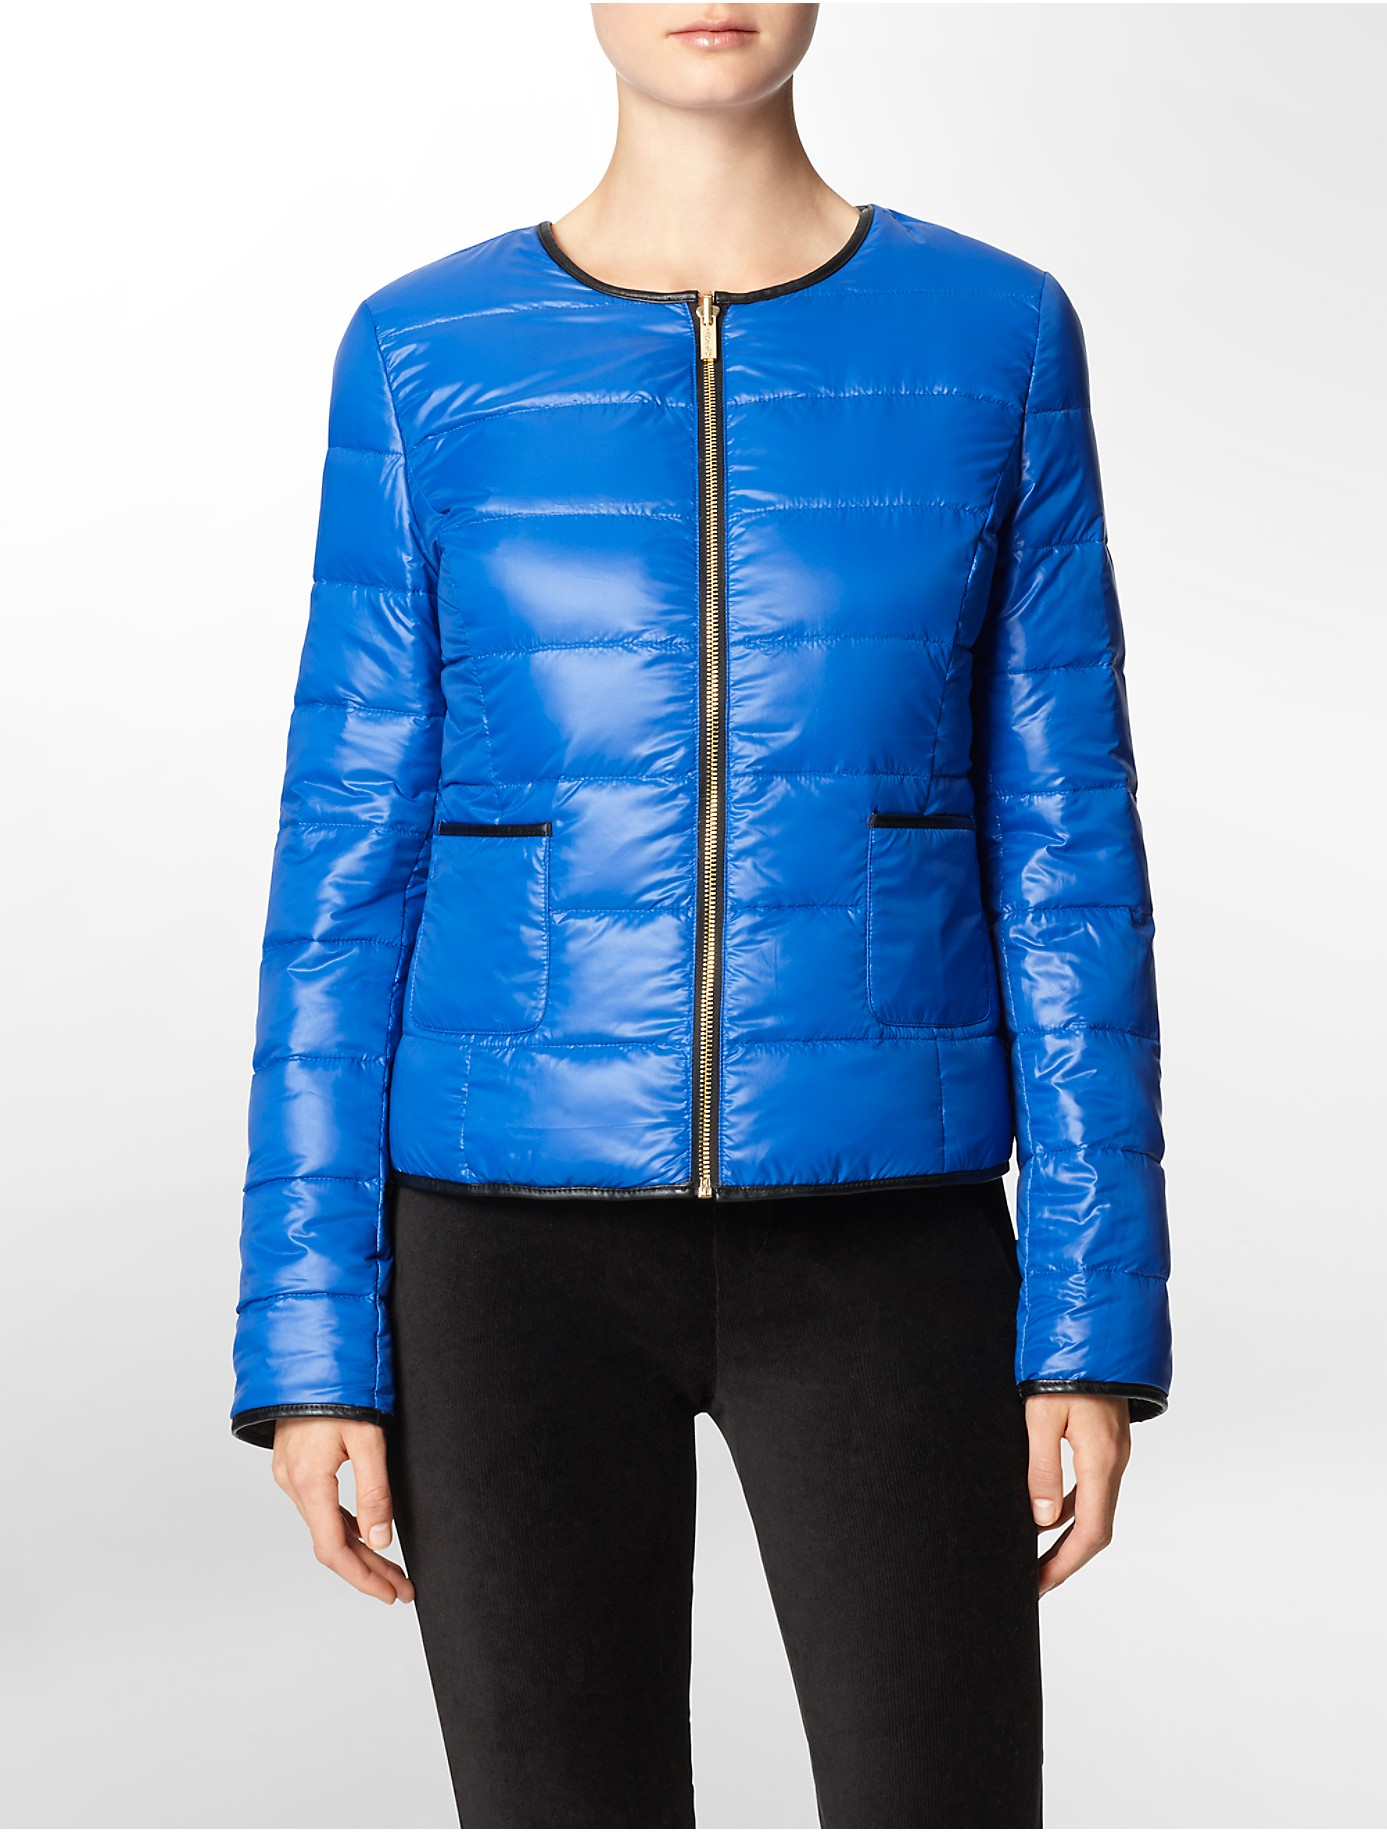 Calvin klein White Label Reversible Puffer Jacket in Blue | Lyst